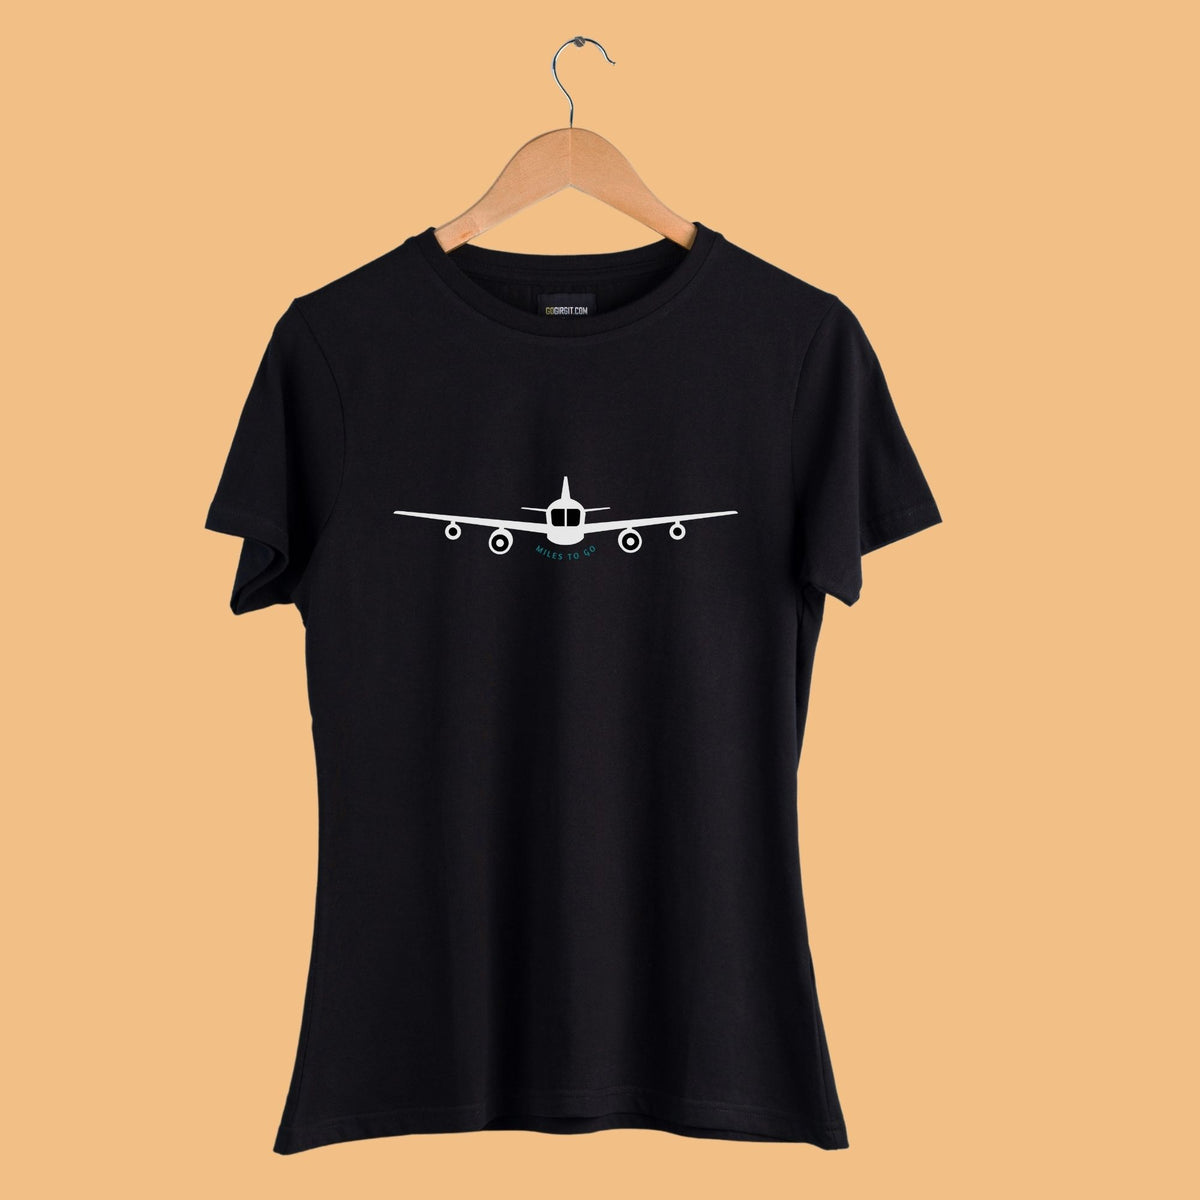 miles-to-go-black-travel-tshirt-for-women-gogirgit_3